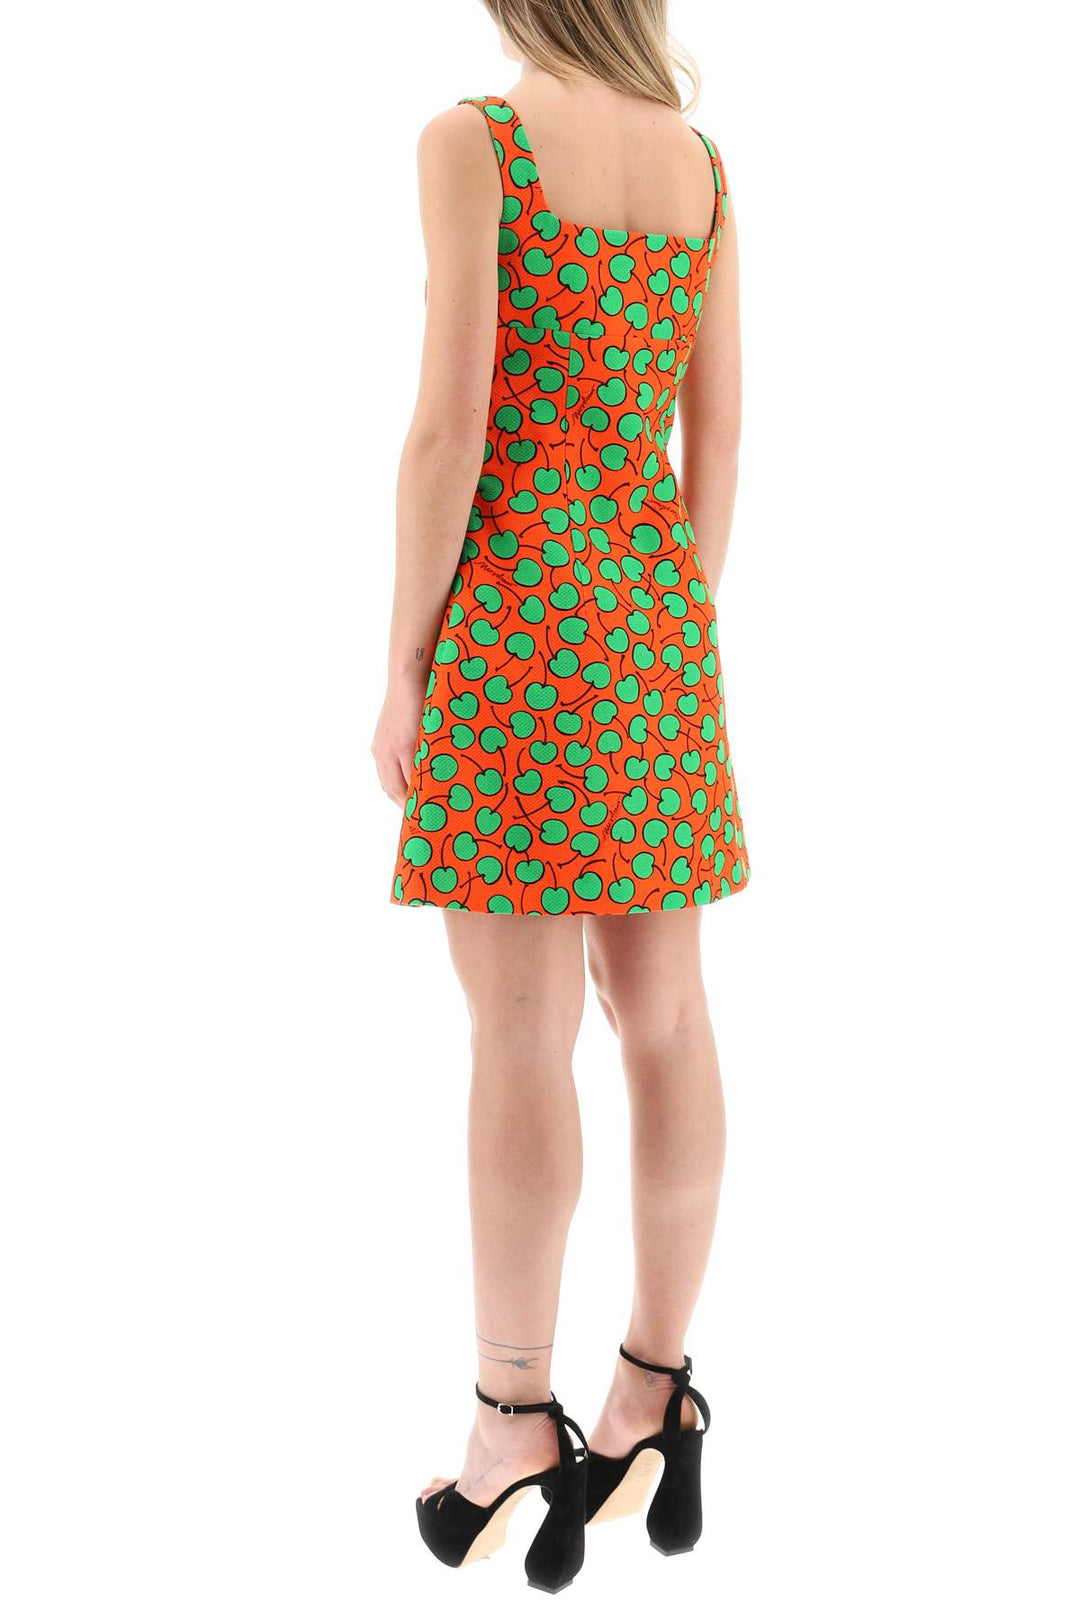 Moschino Cherry Print Short Dress   Arancio